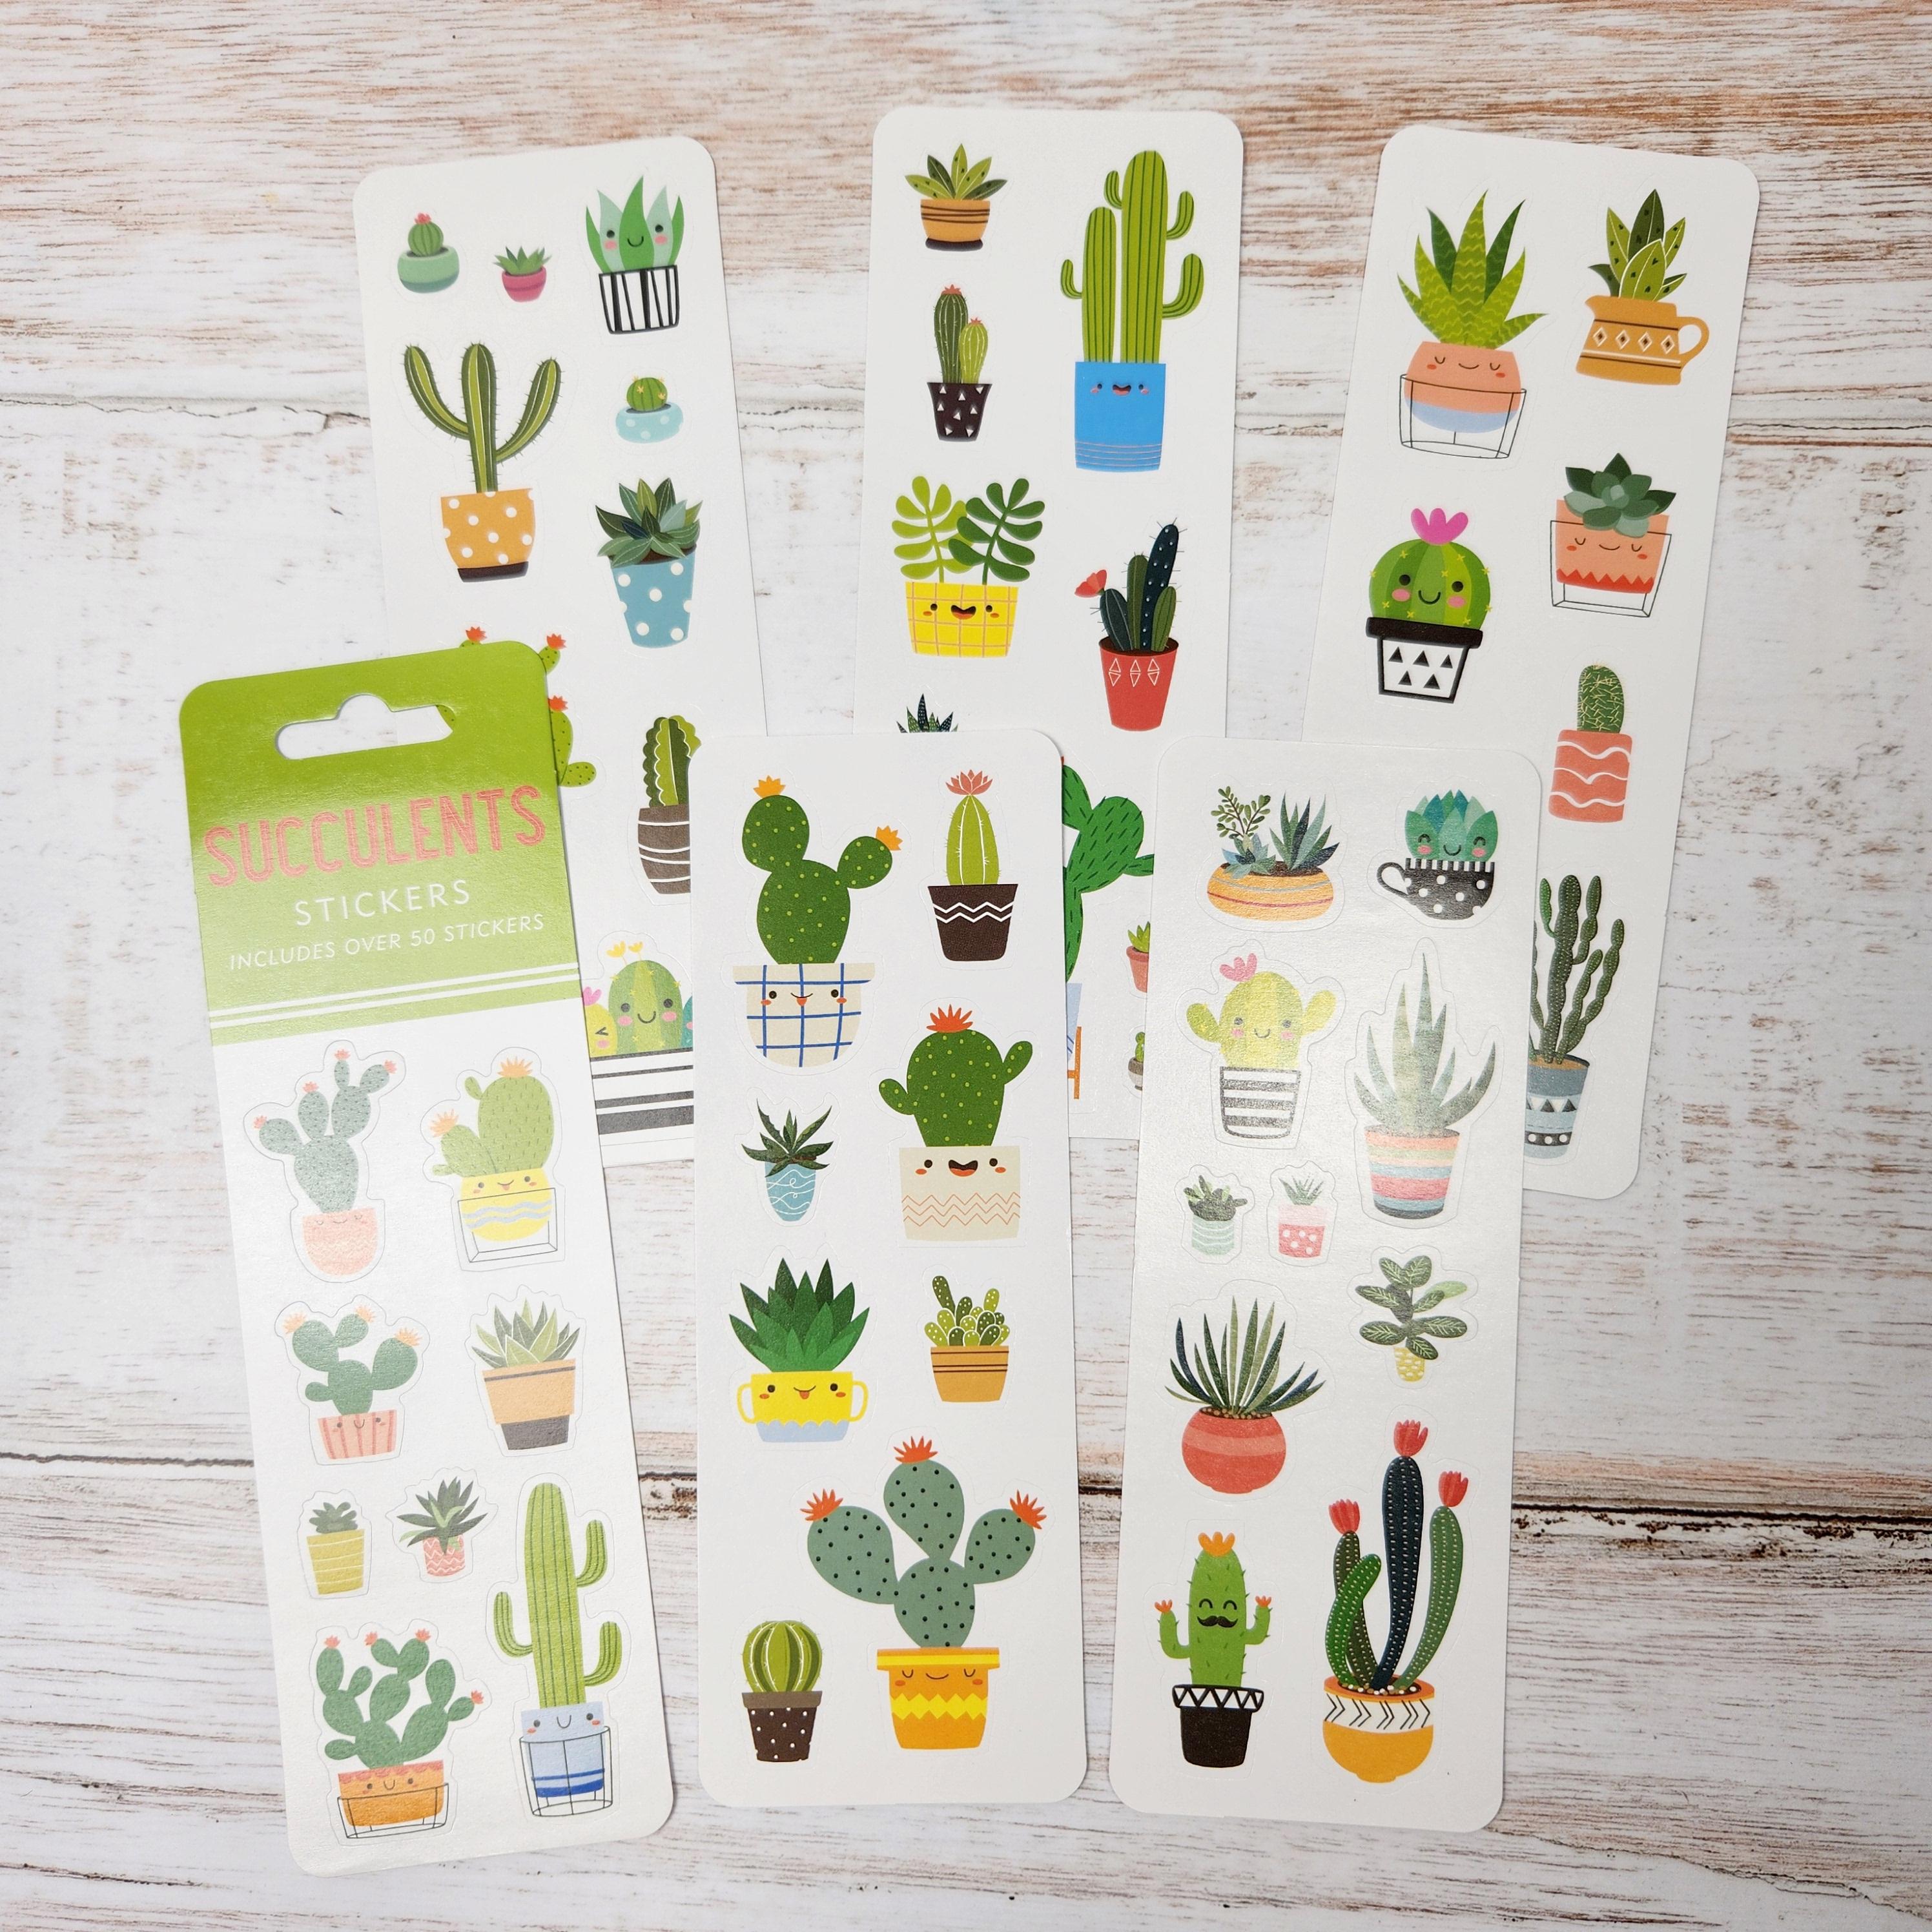 Peter Pauper Press Succulents Sticker Set 6 sheets with cacti - Paper Kooka Australia